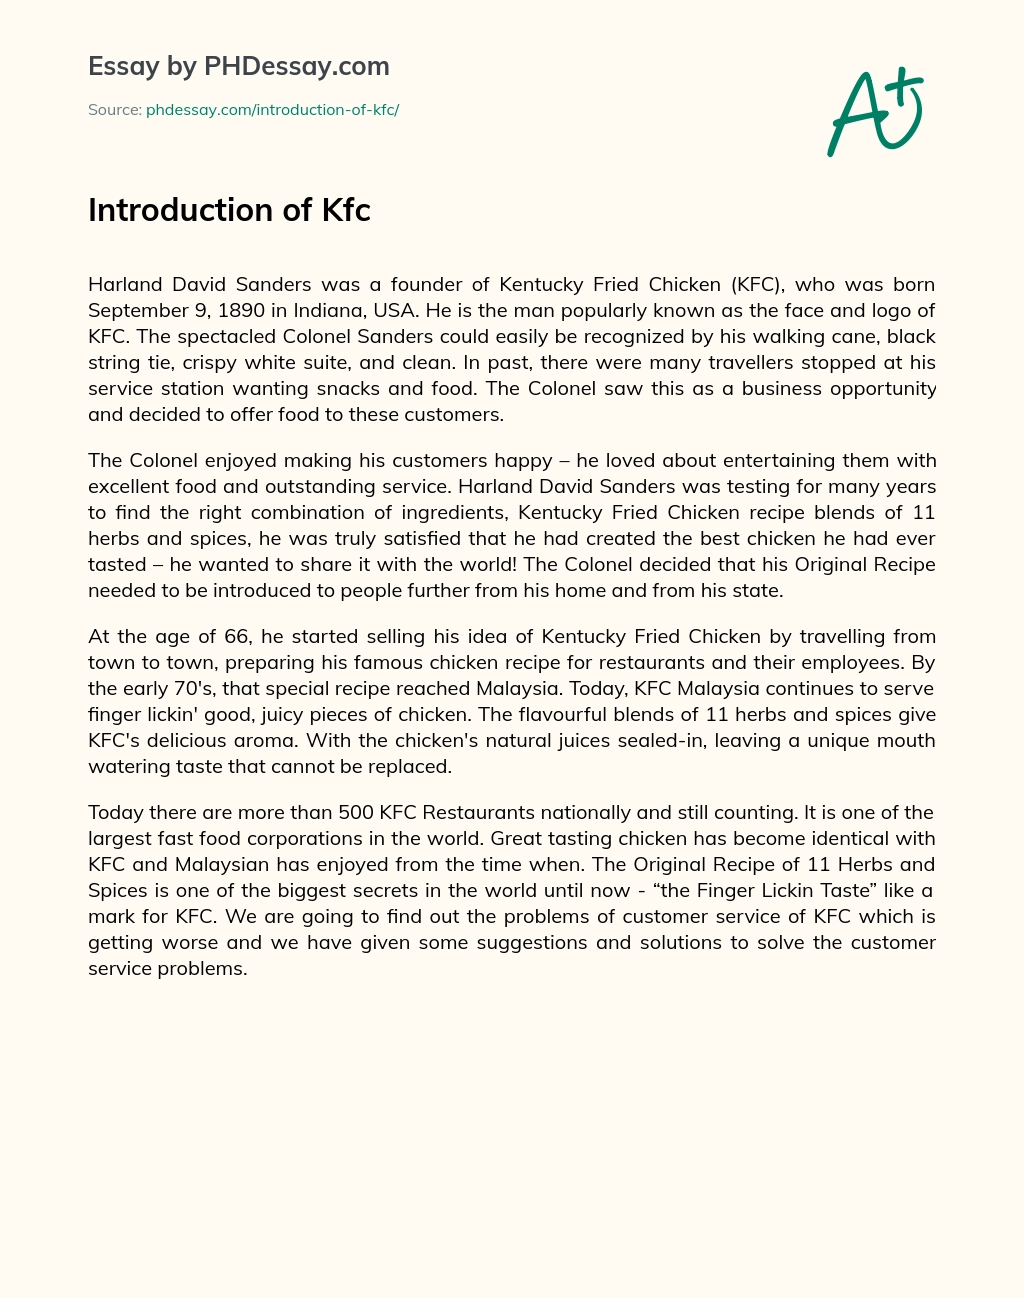 introduction of kfc